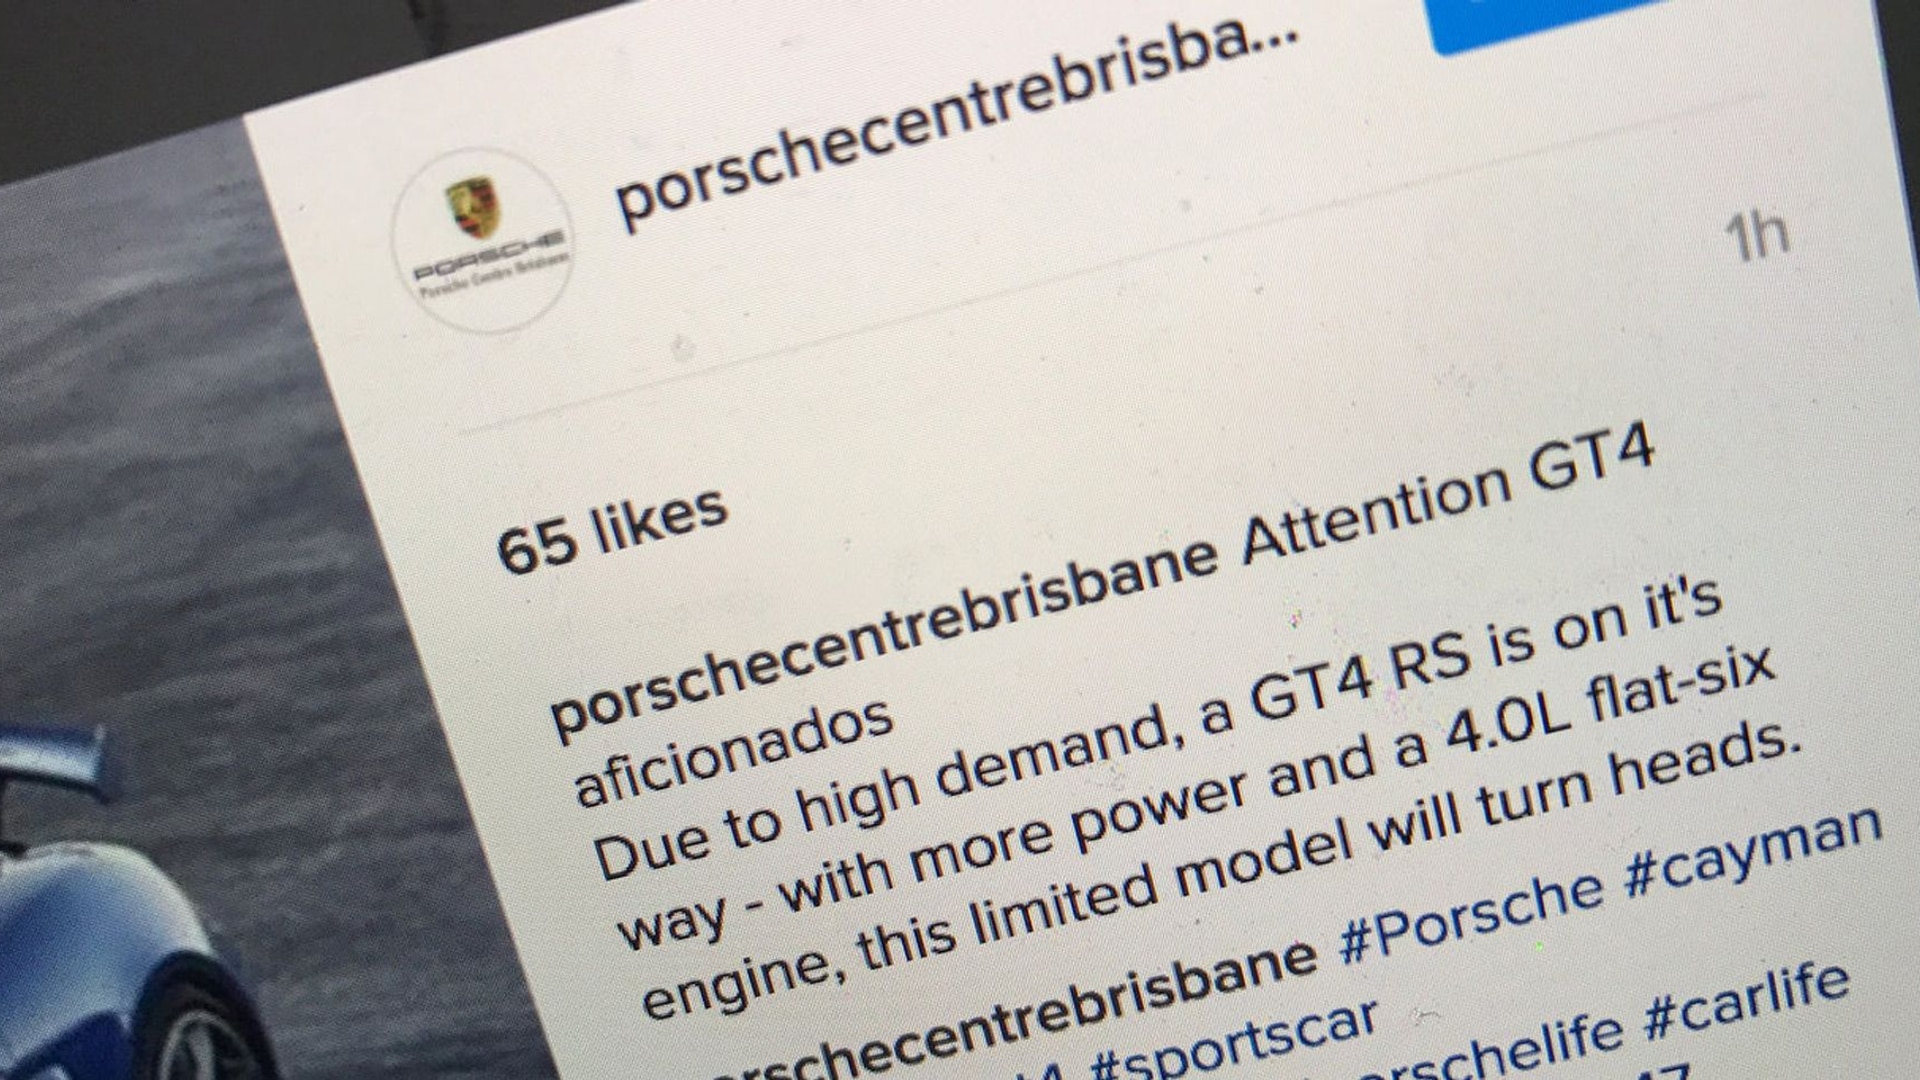 Screenshot of Instagram post from Porsche Centre Brisbane - Image via CarAdvice